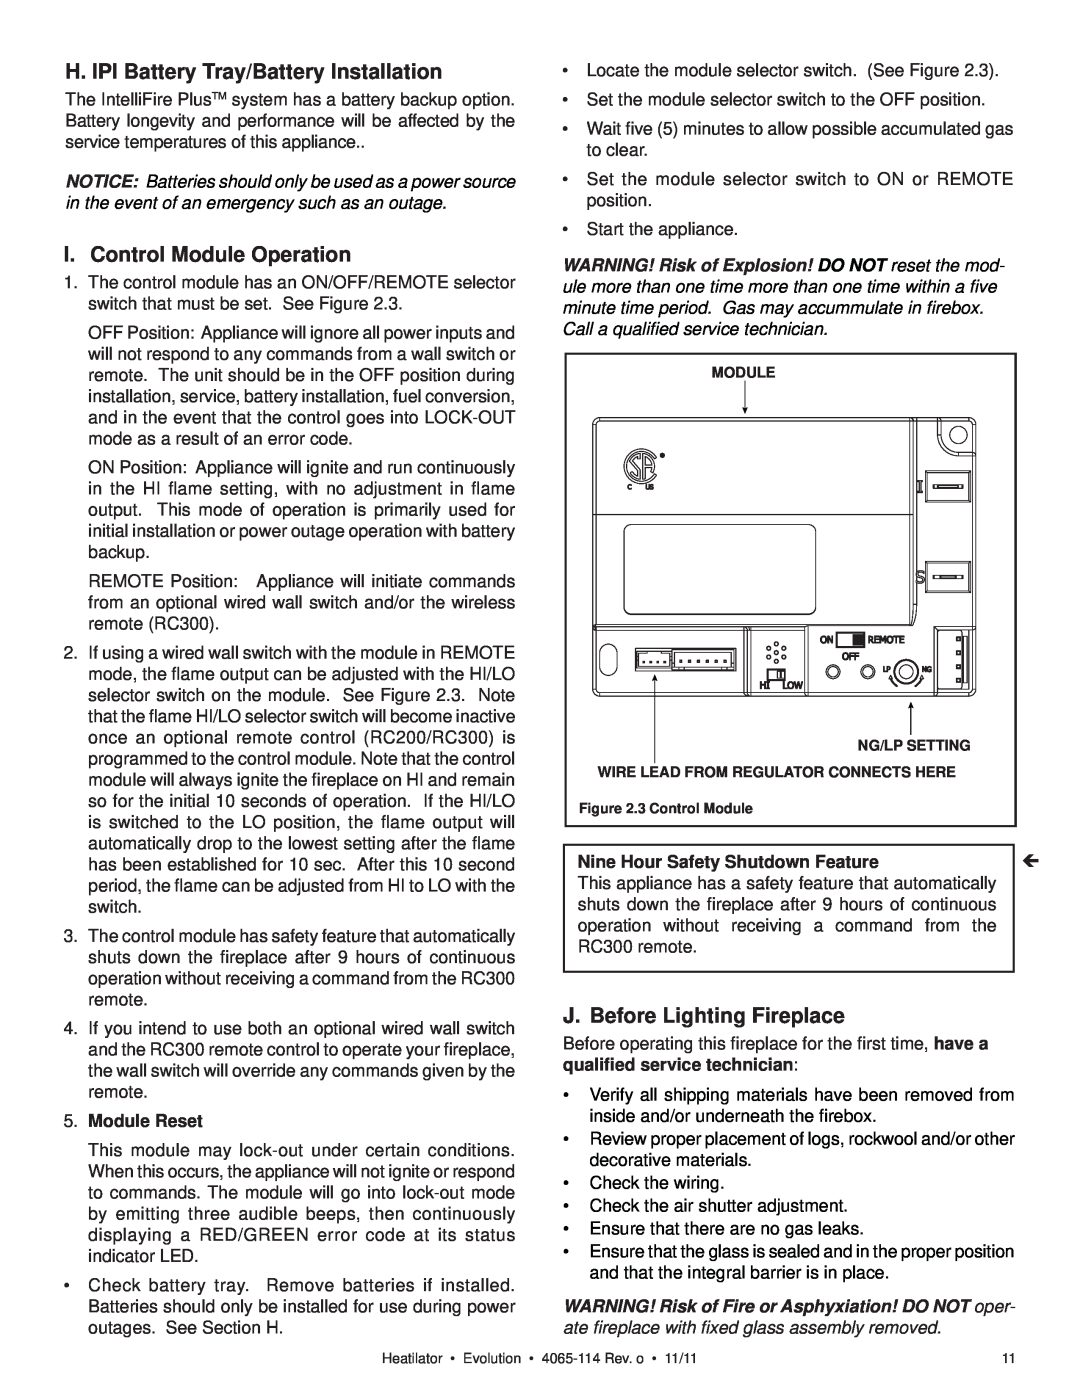 Heatiator NEVO4236I NEVO3630I H. IPI Battery Tray/Battery Installation, I. Control Module Operation, Module Reset 